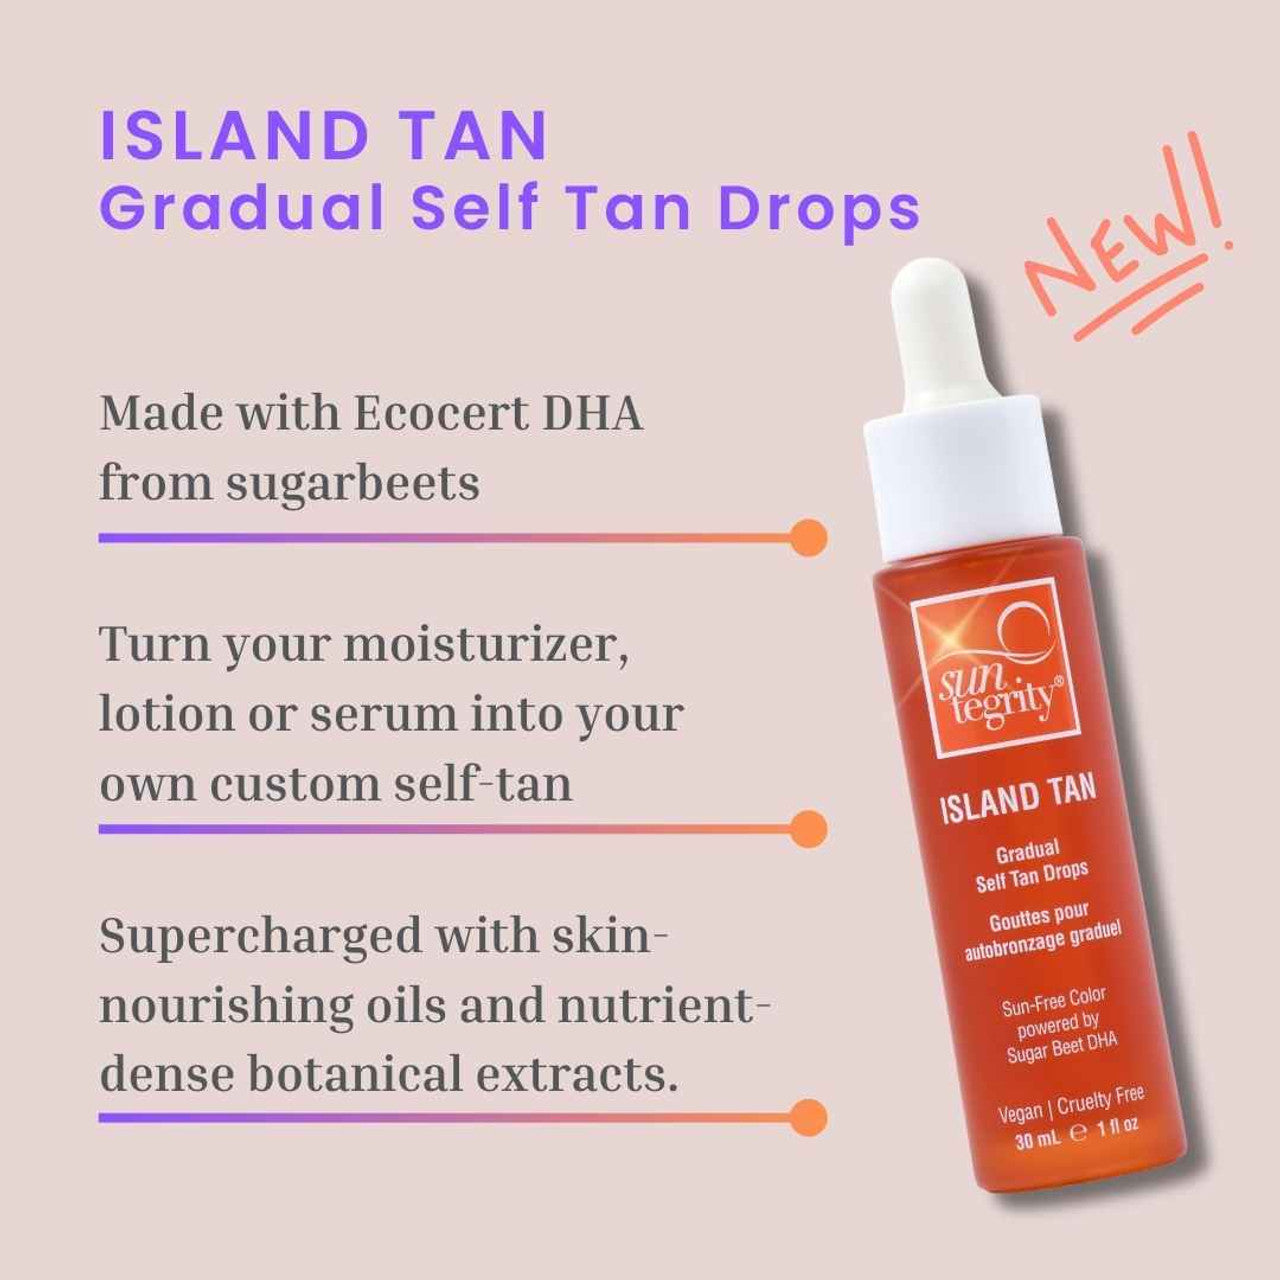 Suntegrity Island Tan - Gradual Self Tanning Drops